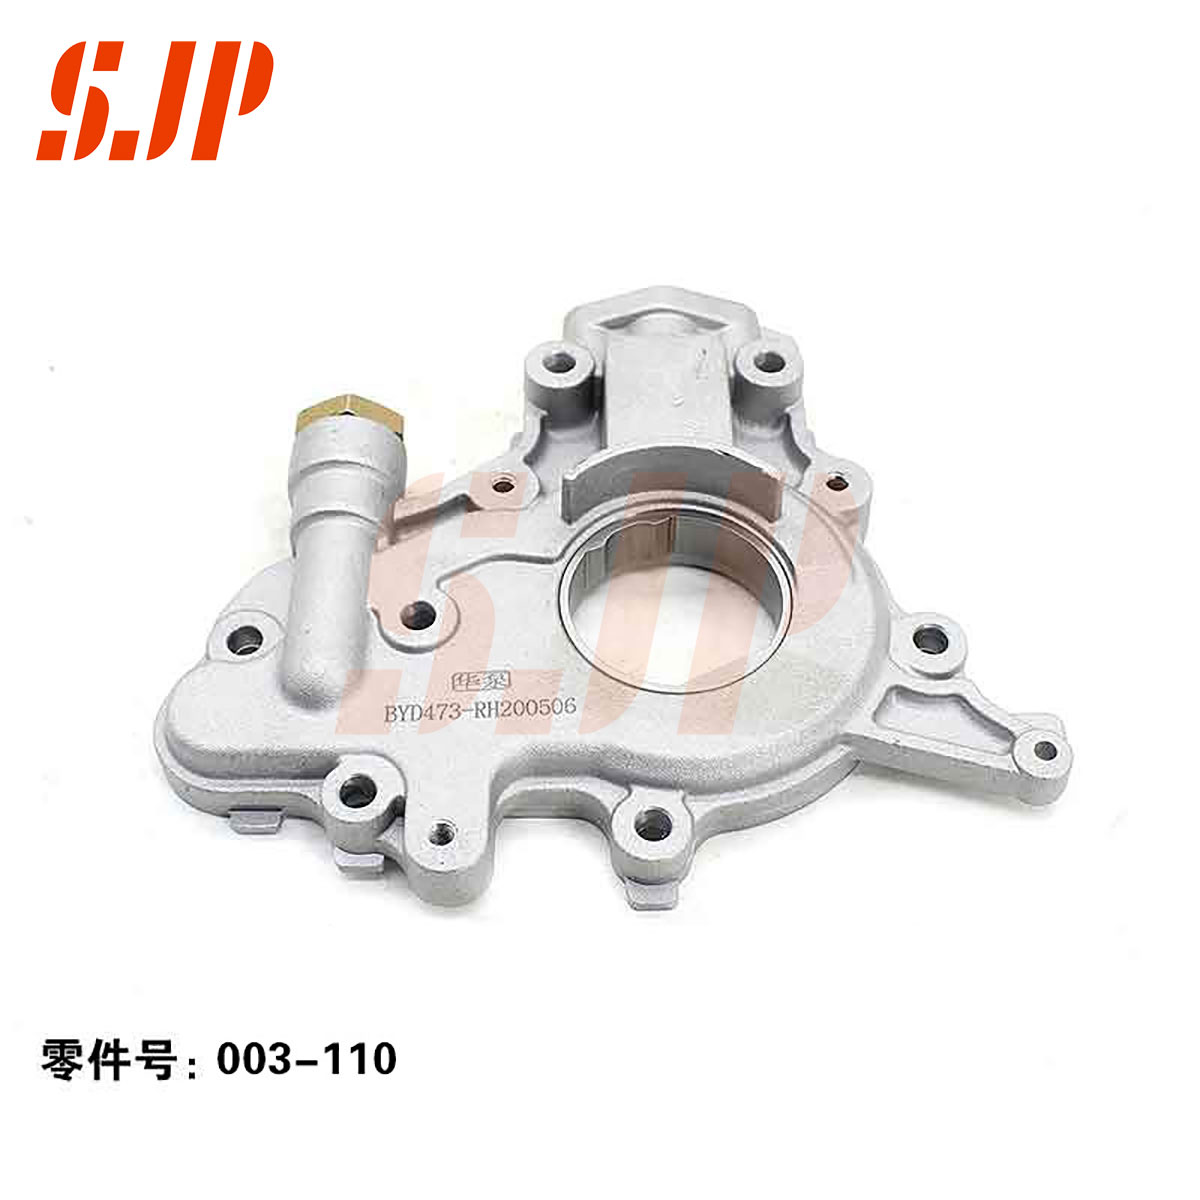 SJ-003-110 Oil Pump For BYD 473Q